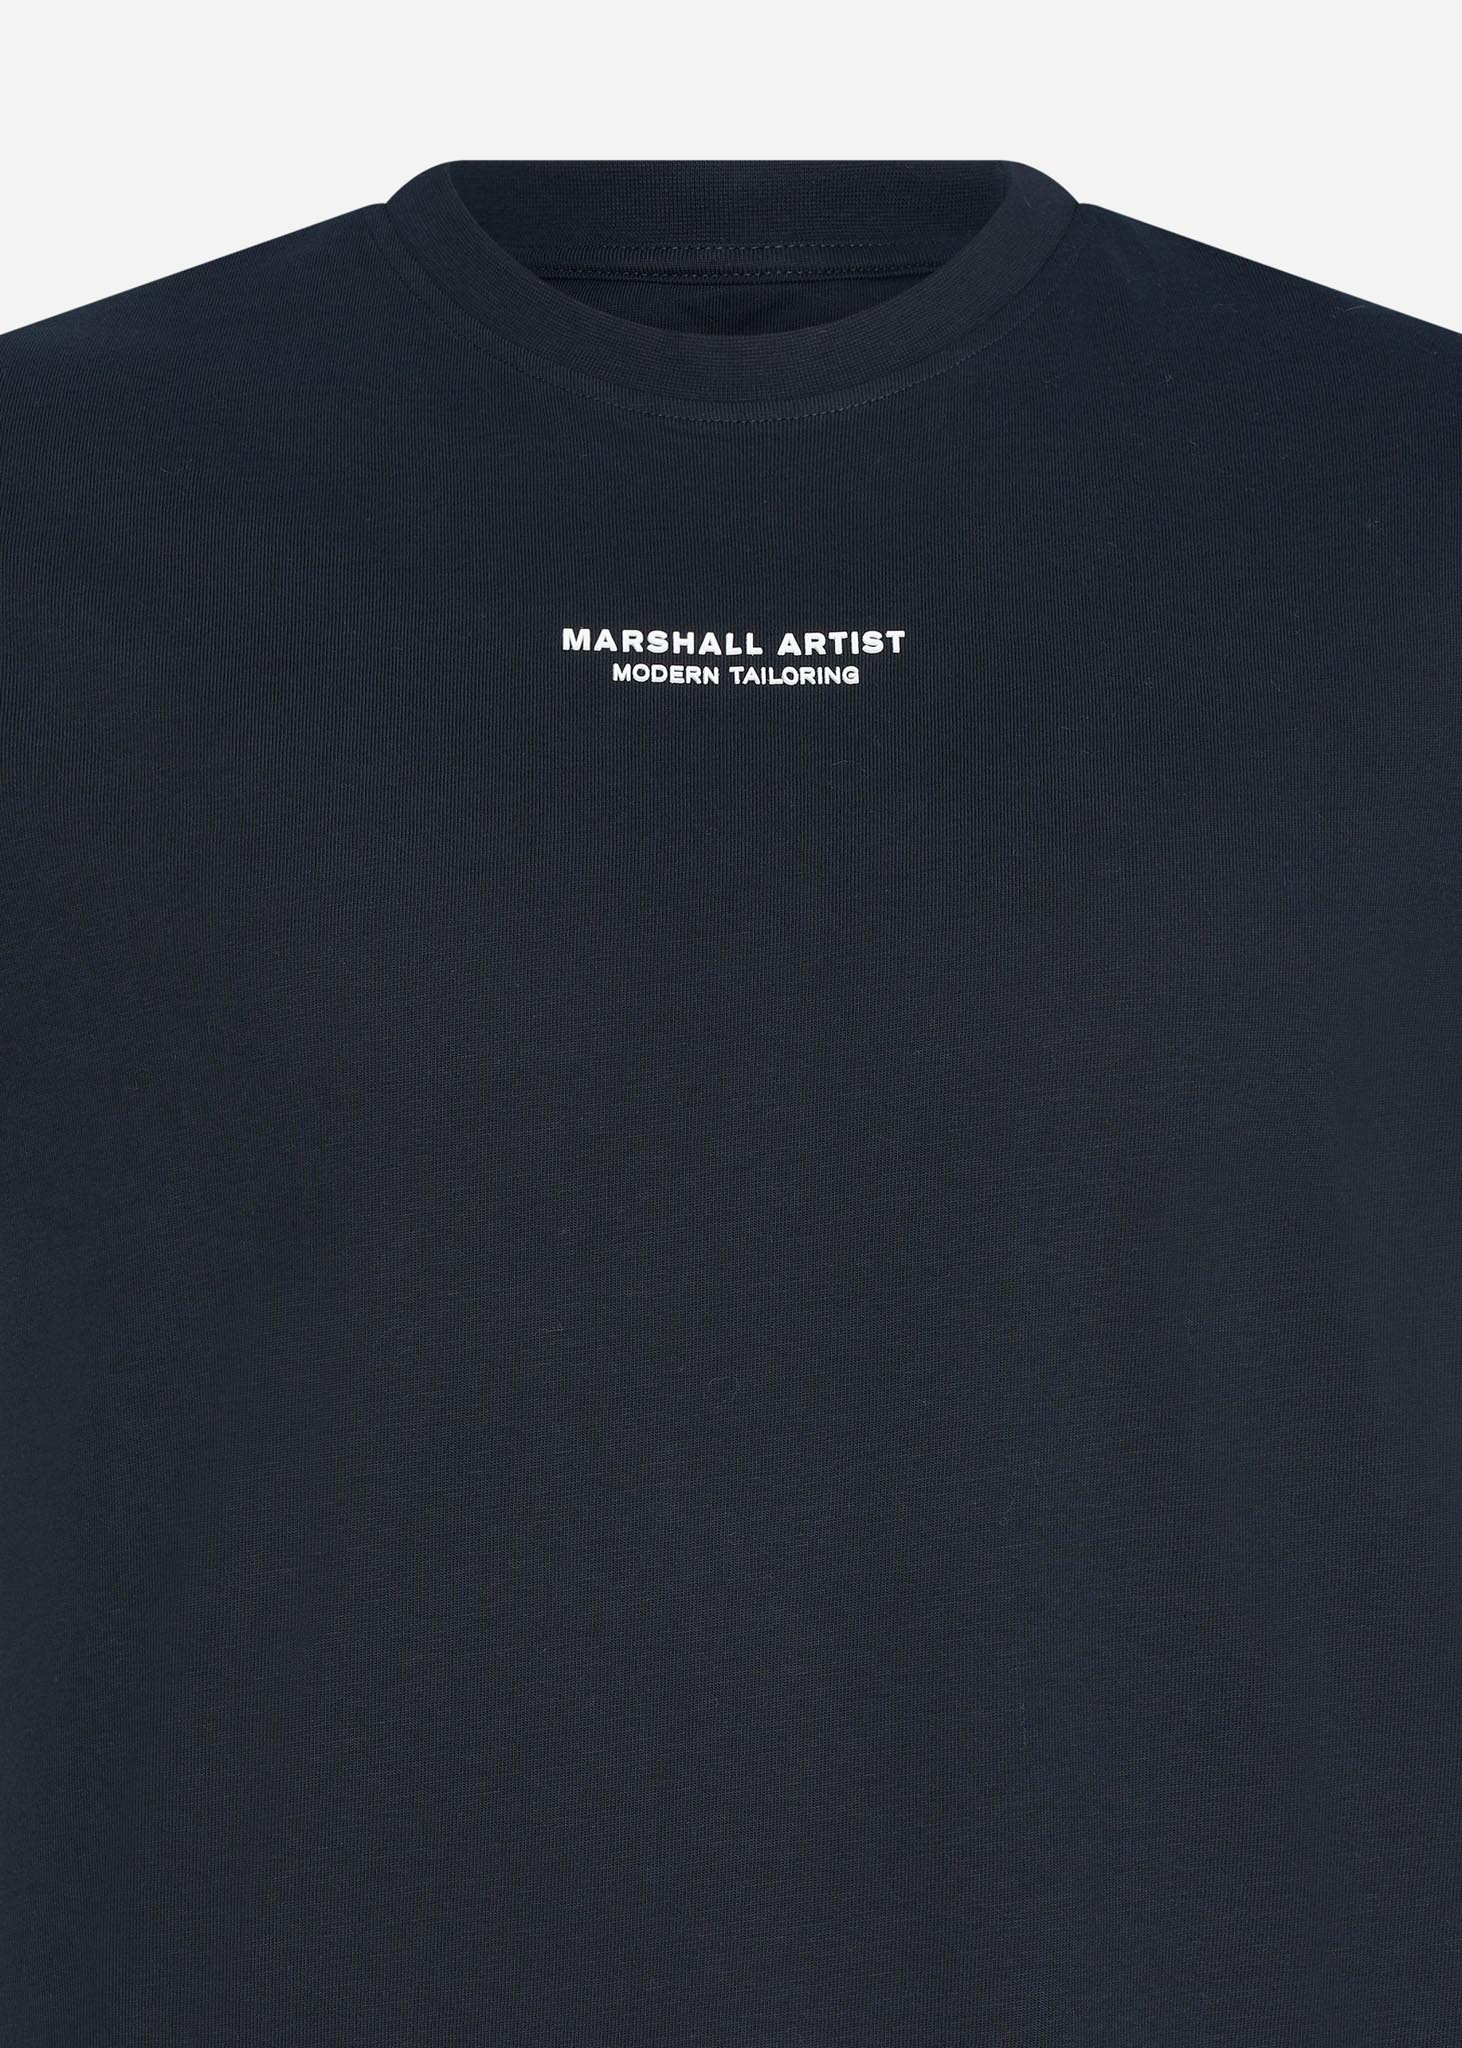 Marshall Artist T-shirts  Injection t-shirt - navy 